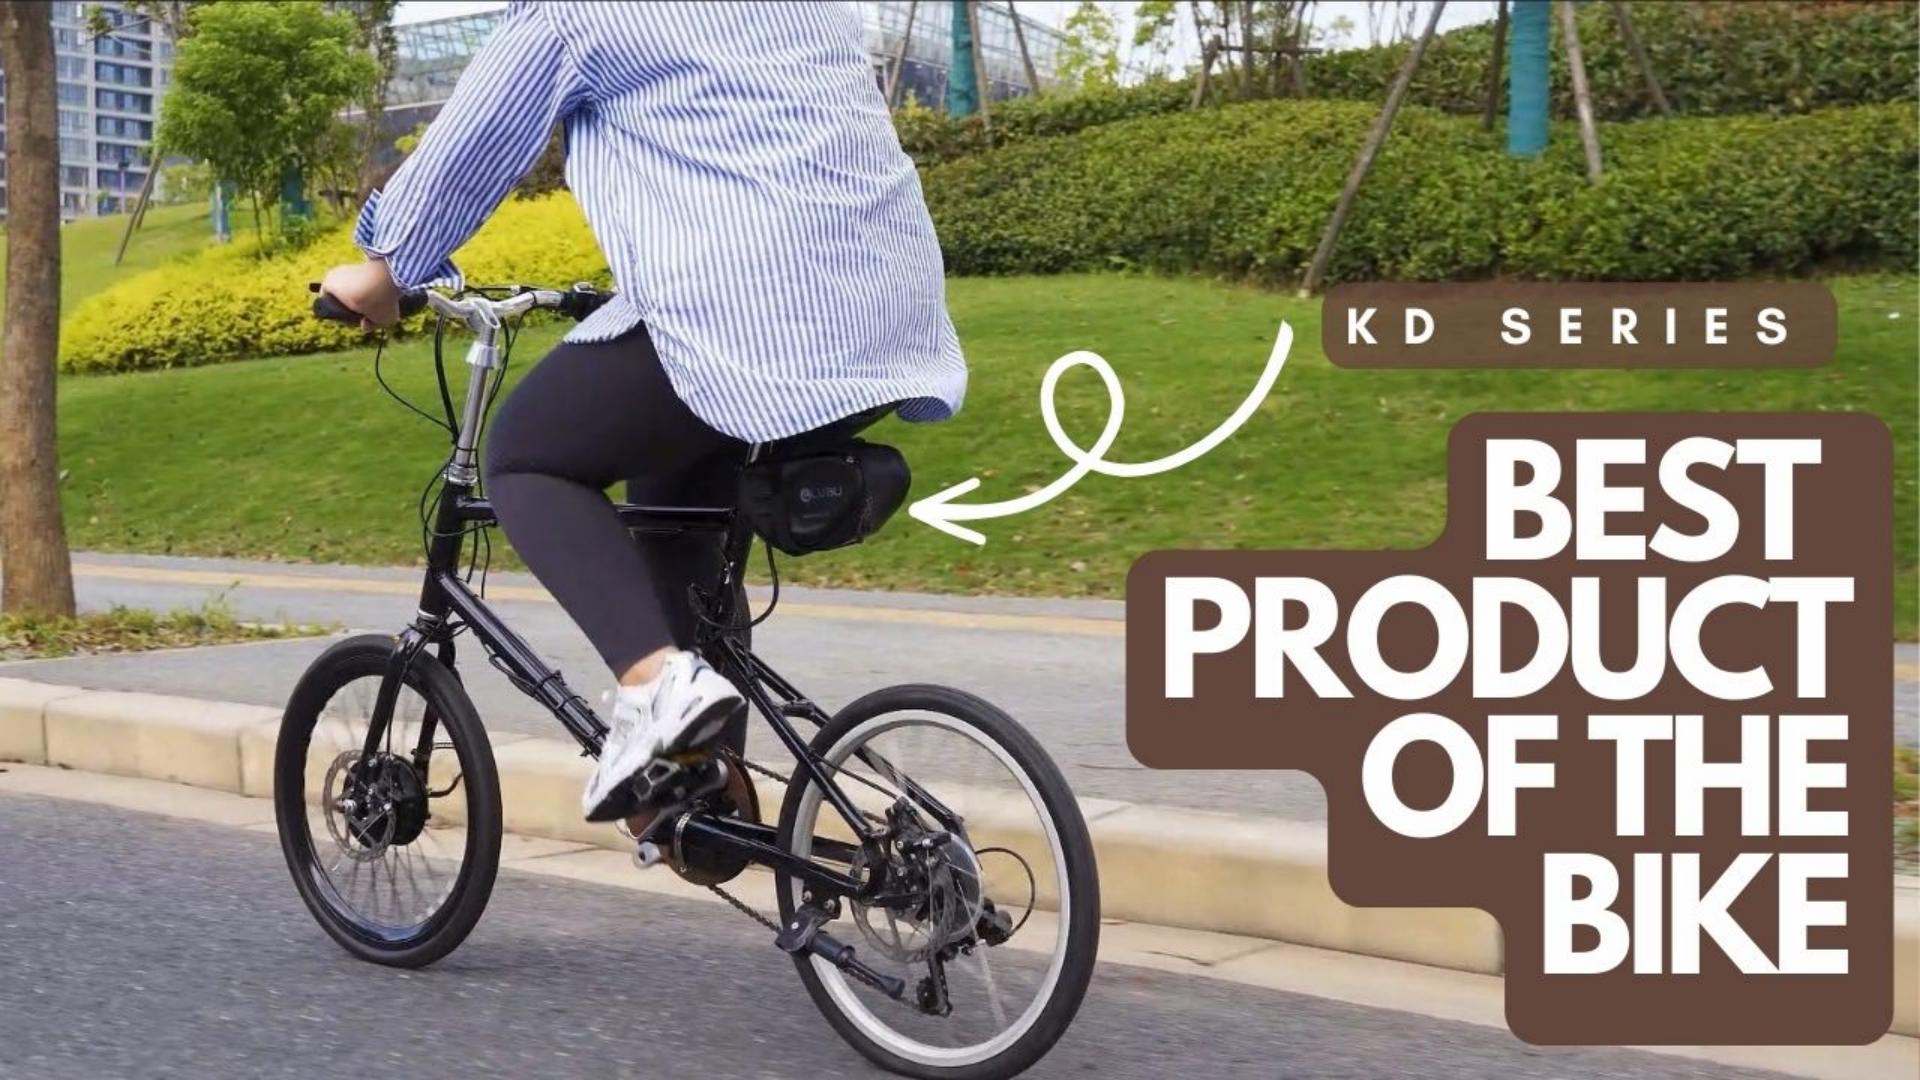 KD Series Ebike kit/ Best product of the bike